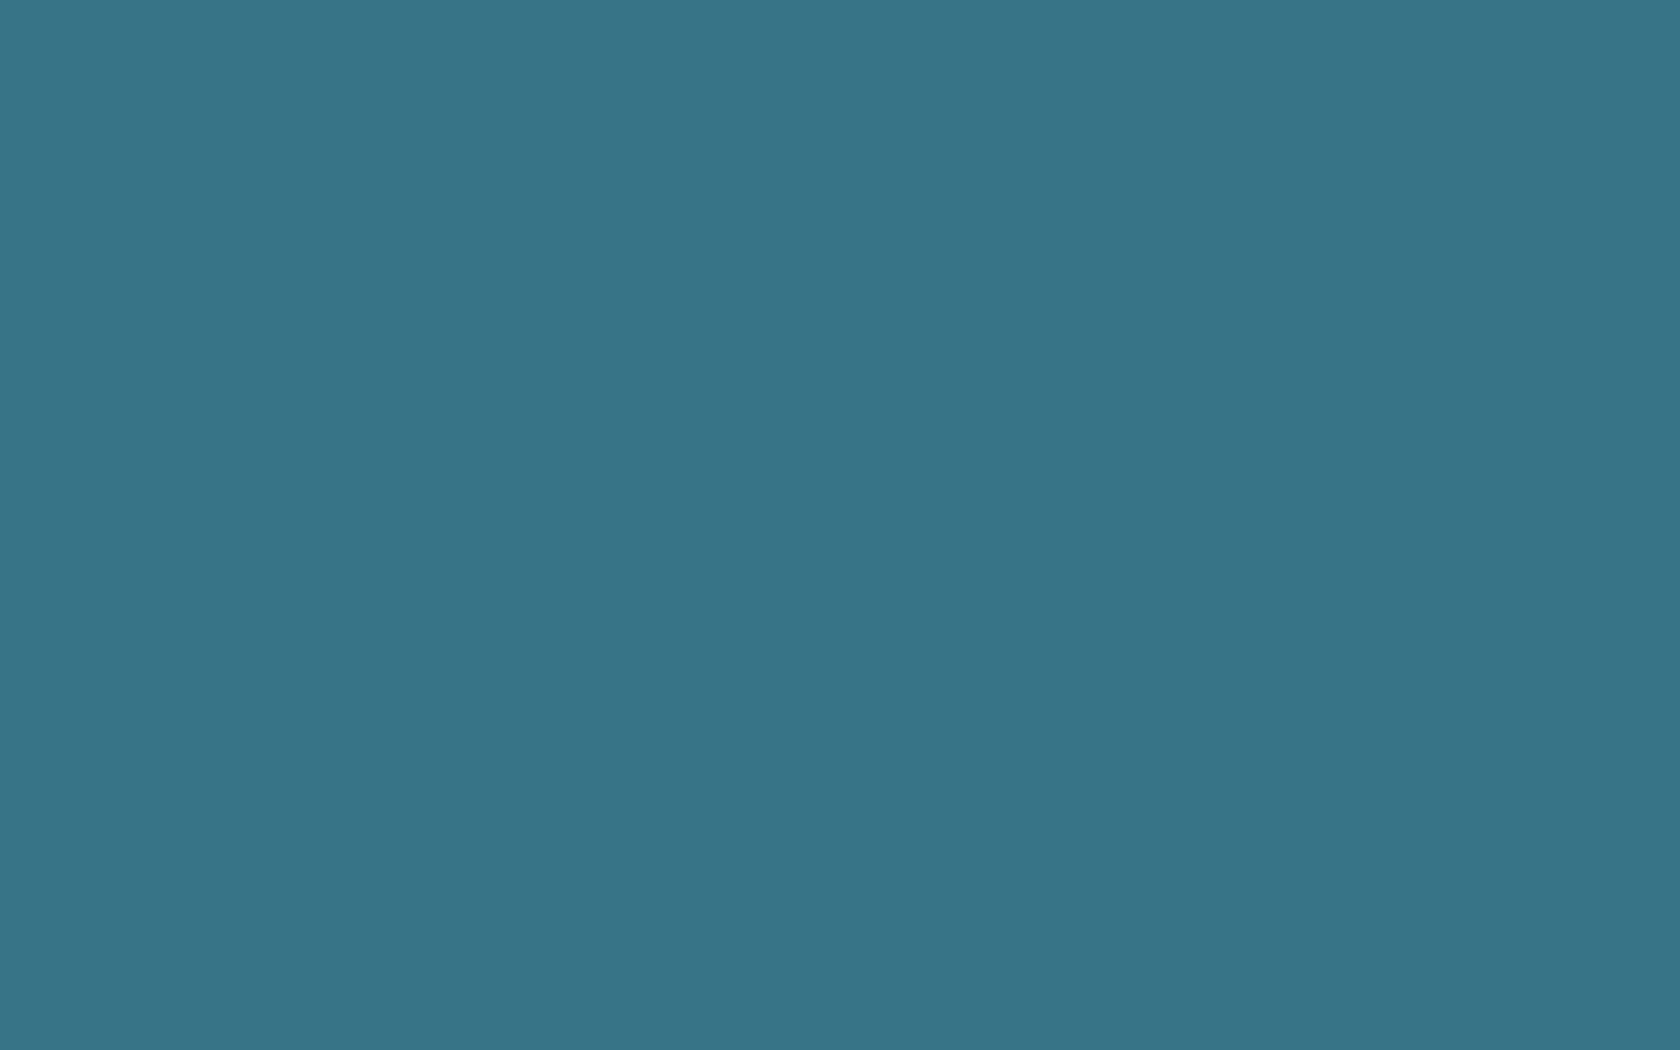 1680x1050 Teal Blue Solid Color Background